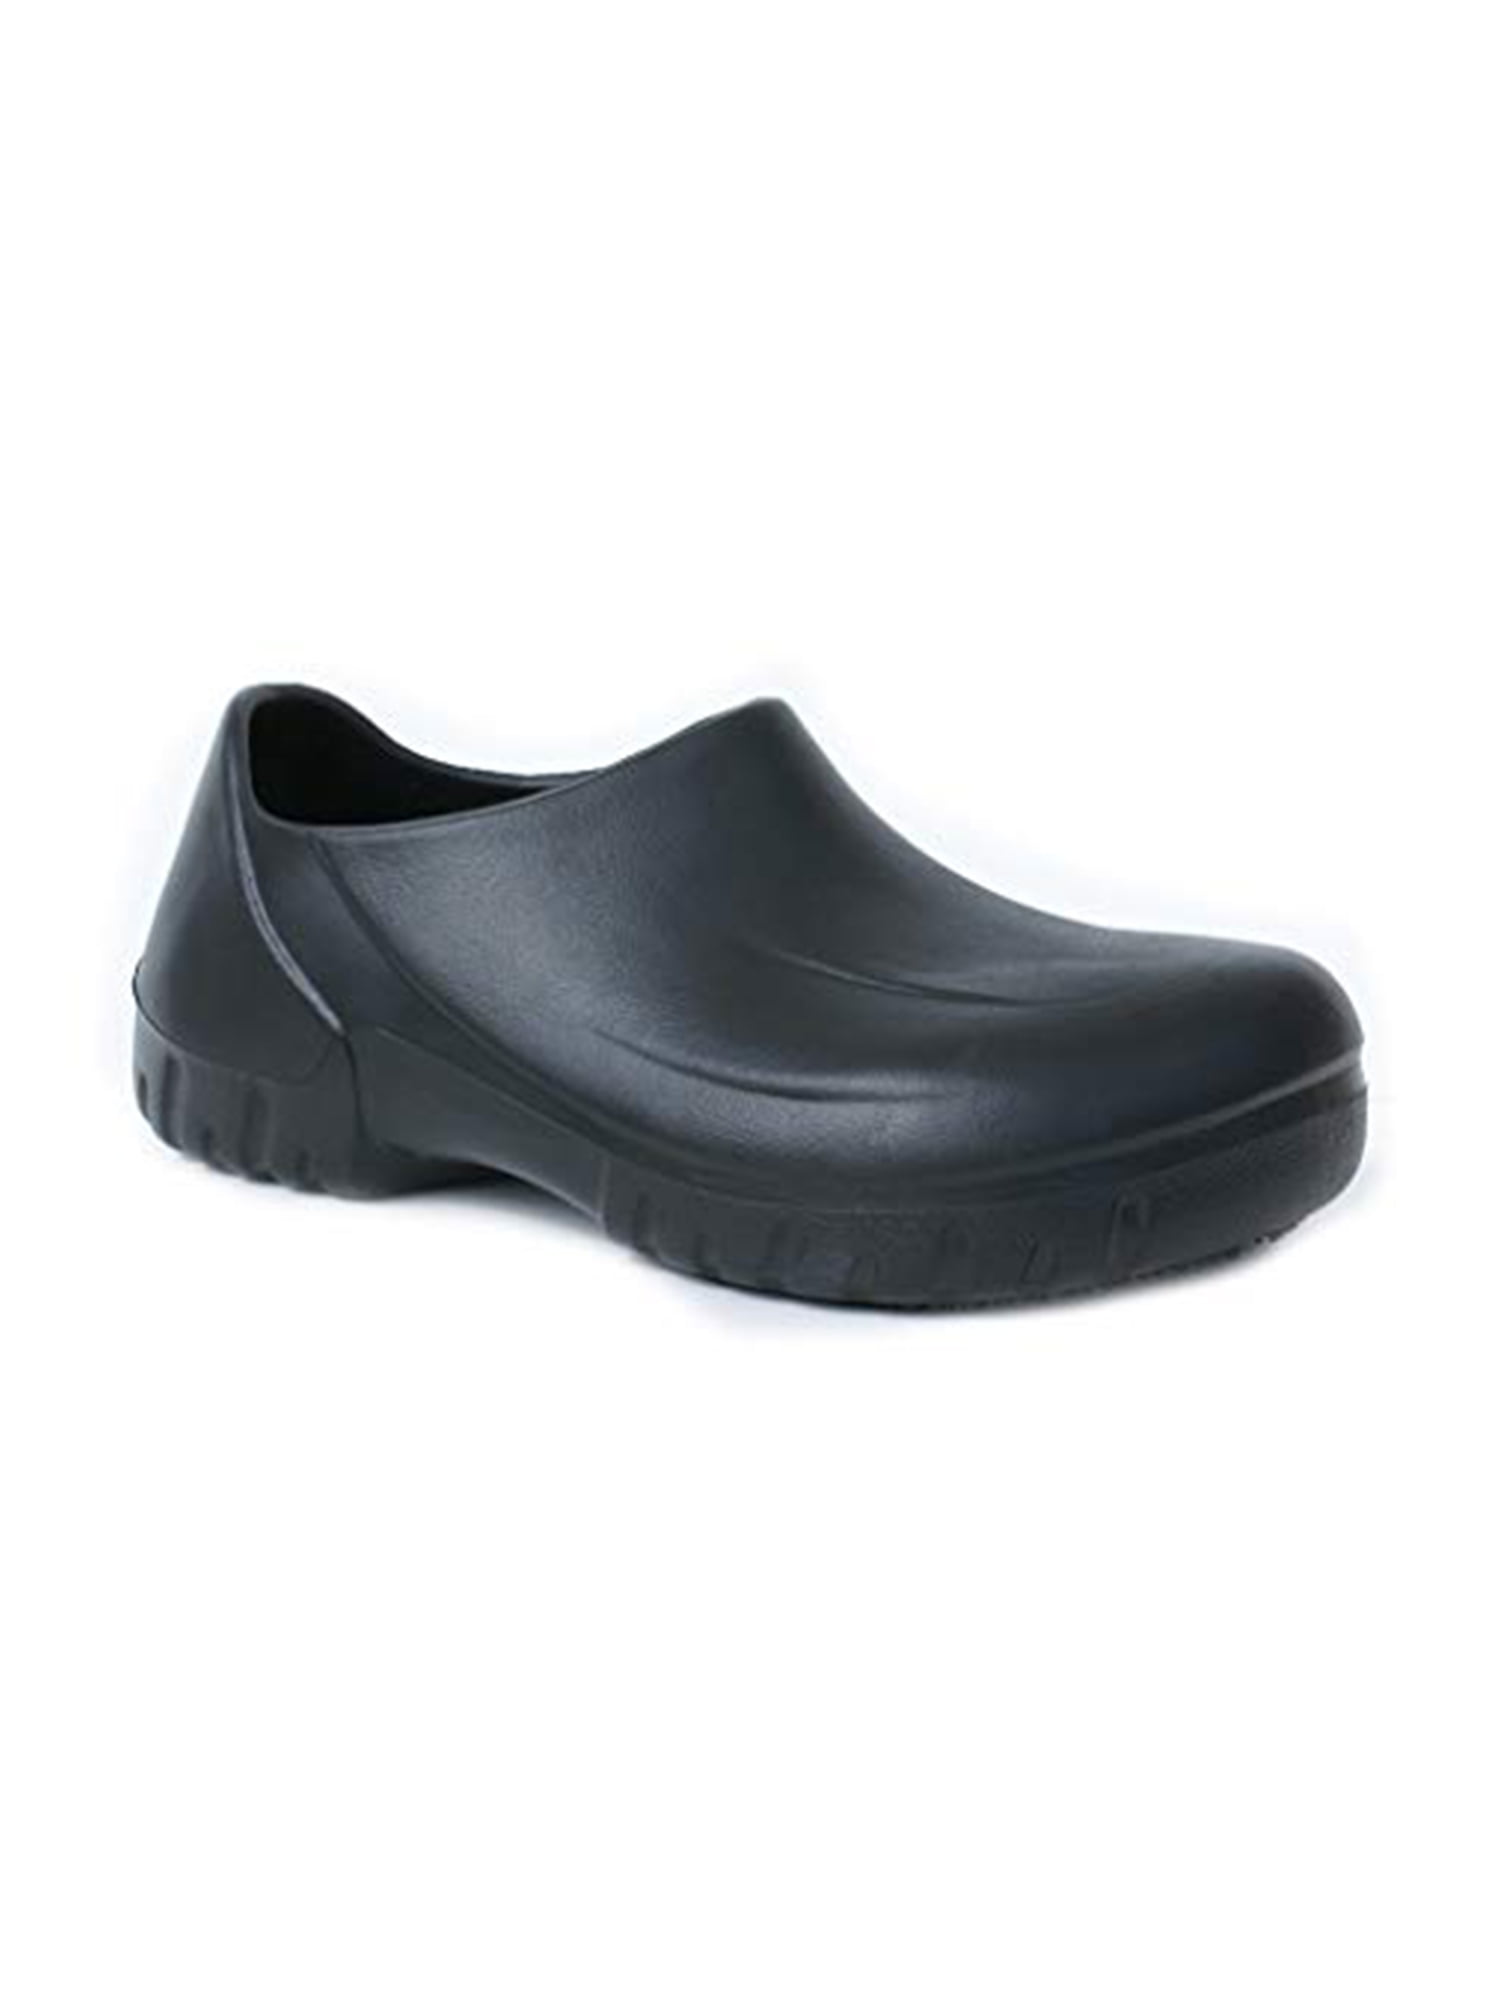 Lightweight Work Shoes Men Women Professional Slip & Oil Resistant Pull ...